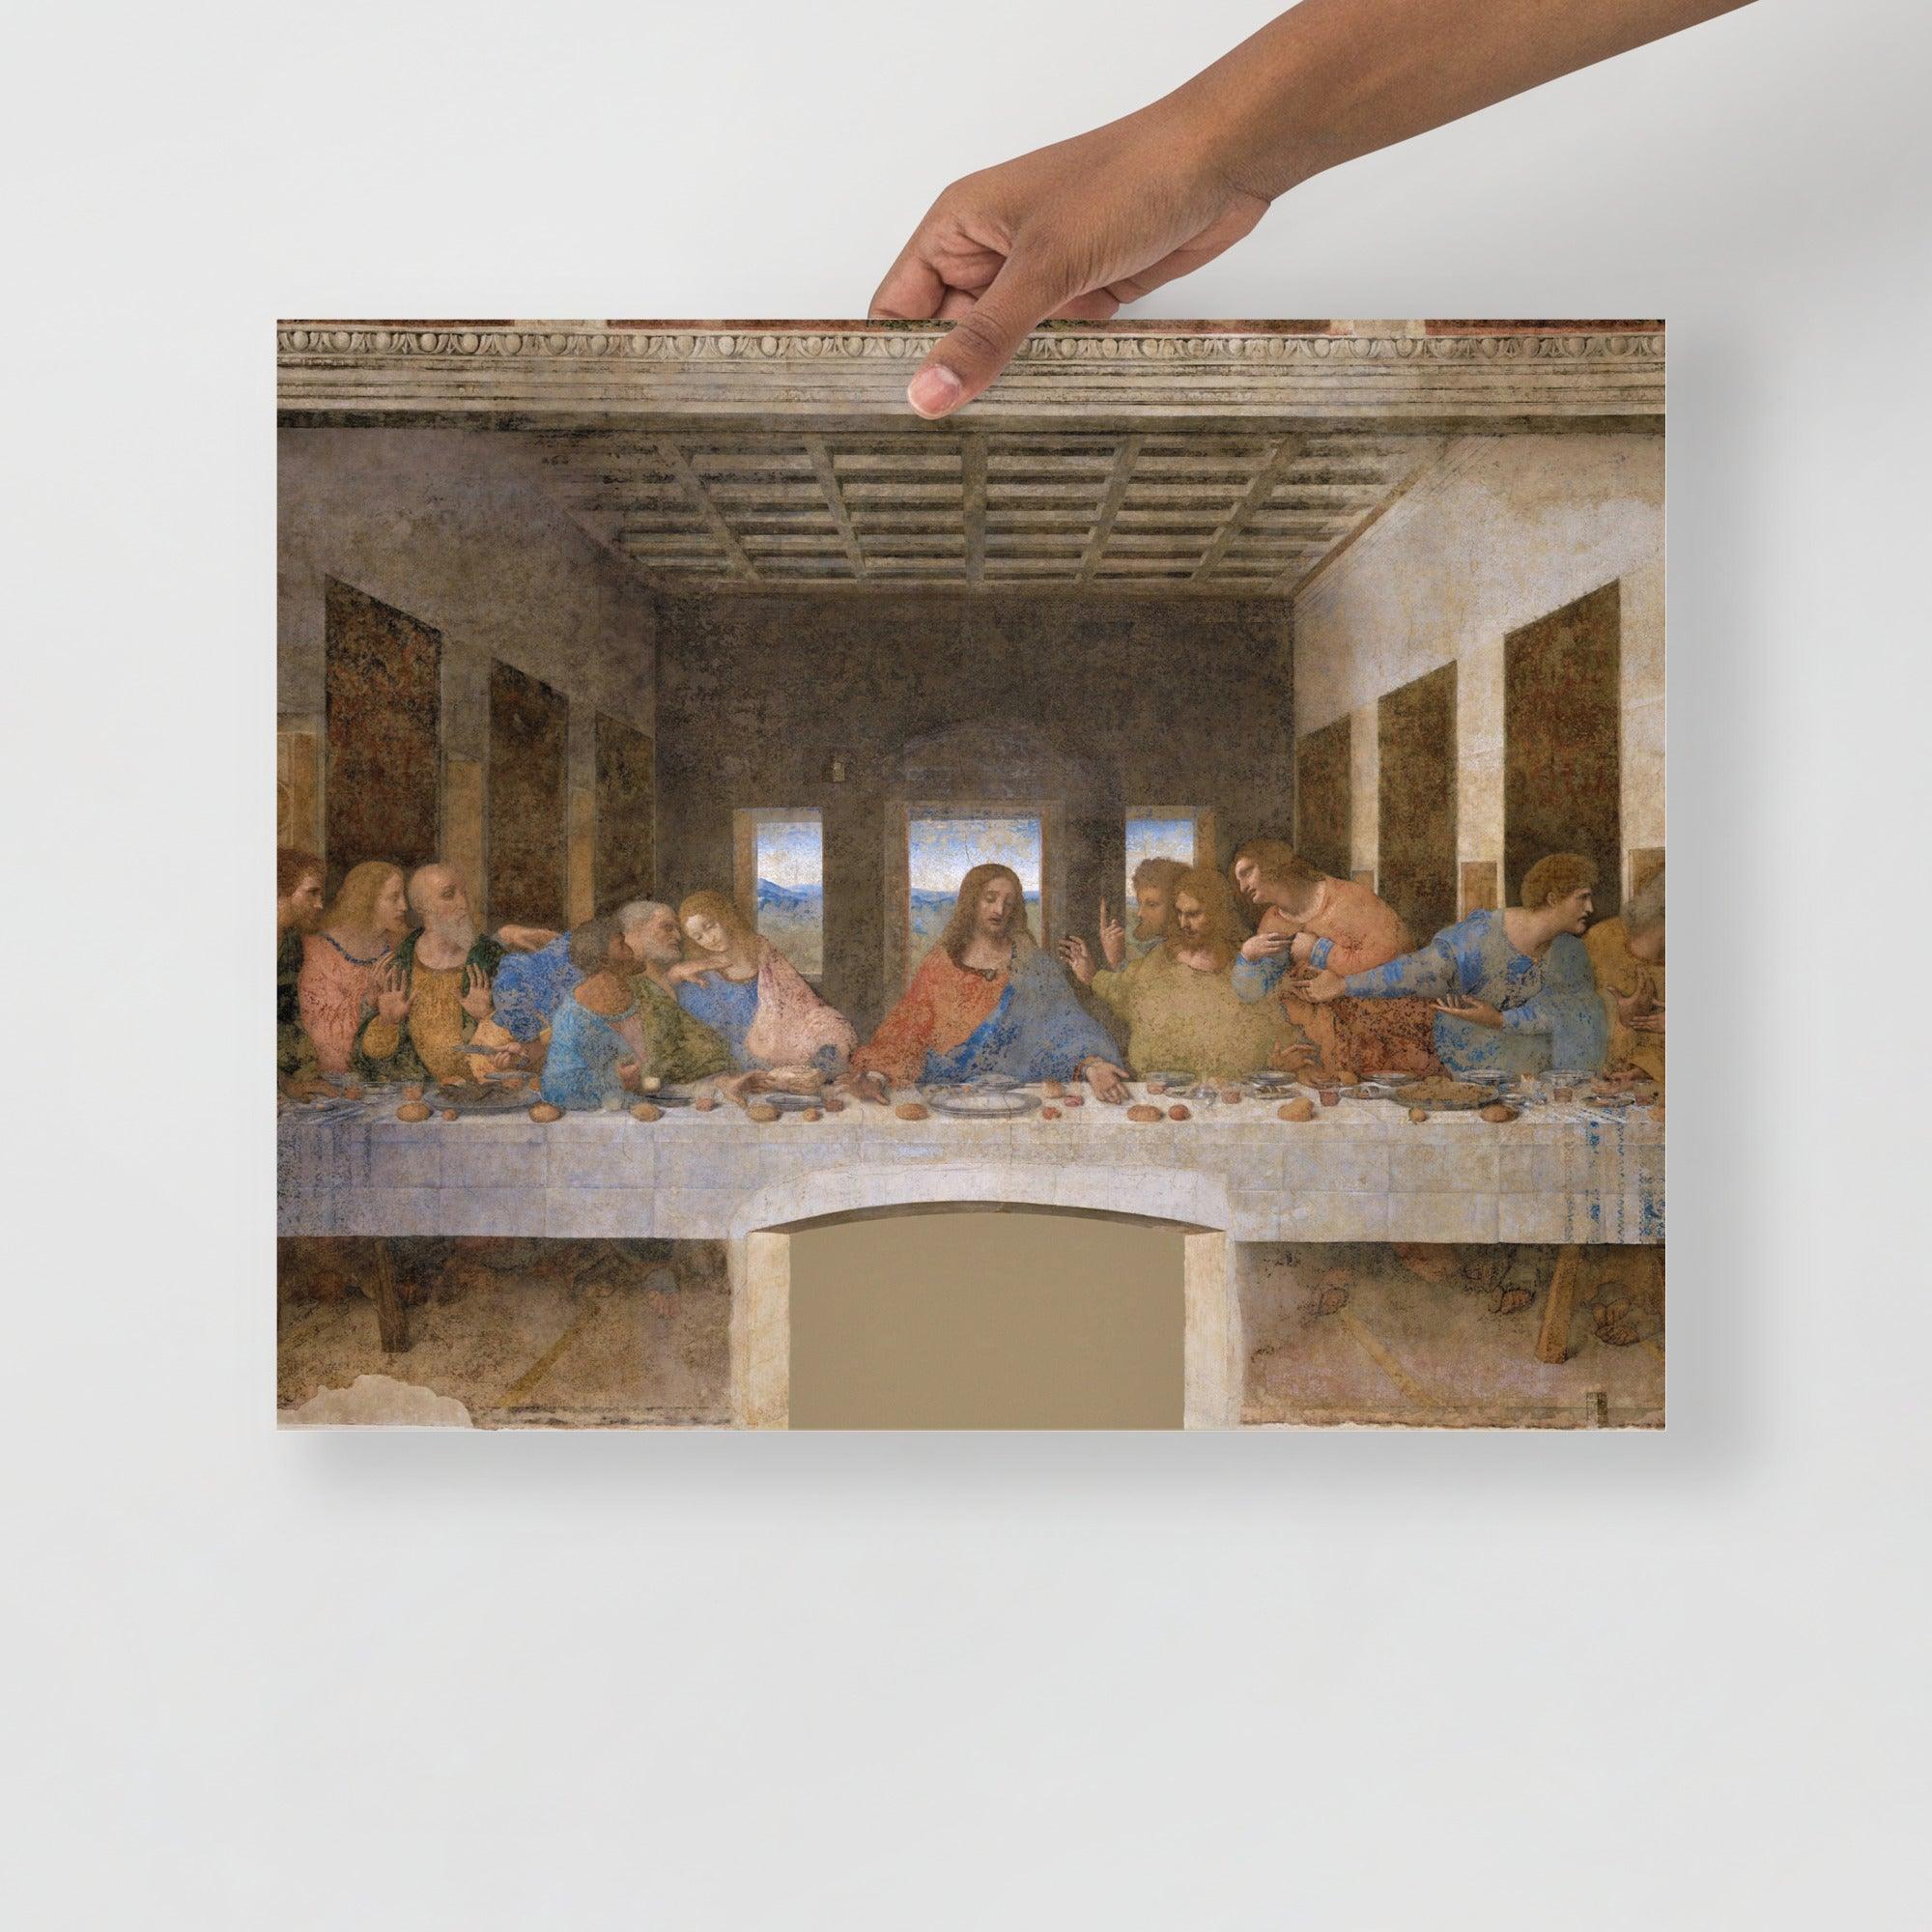 The Last Supper by Leonardo Da Vinci poster on a plain backdrop in size 16x20”.